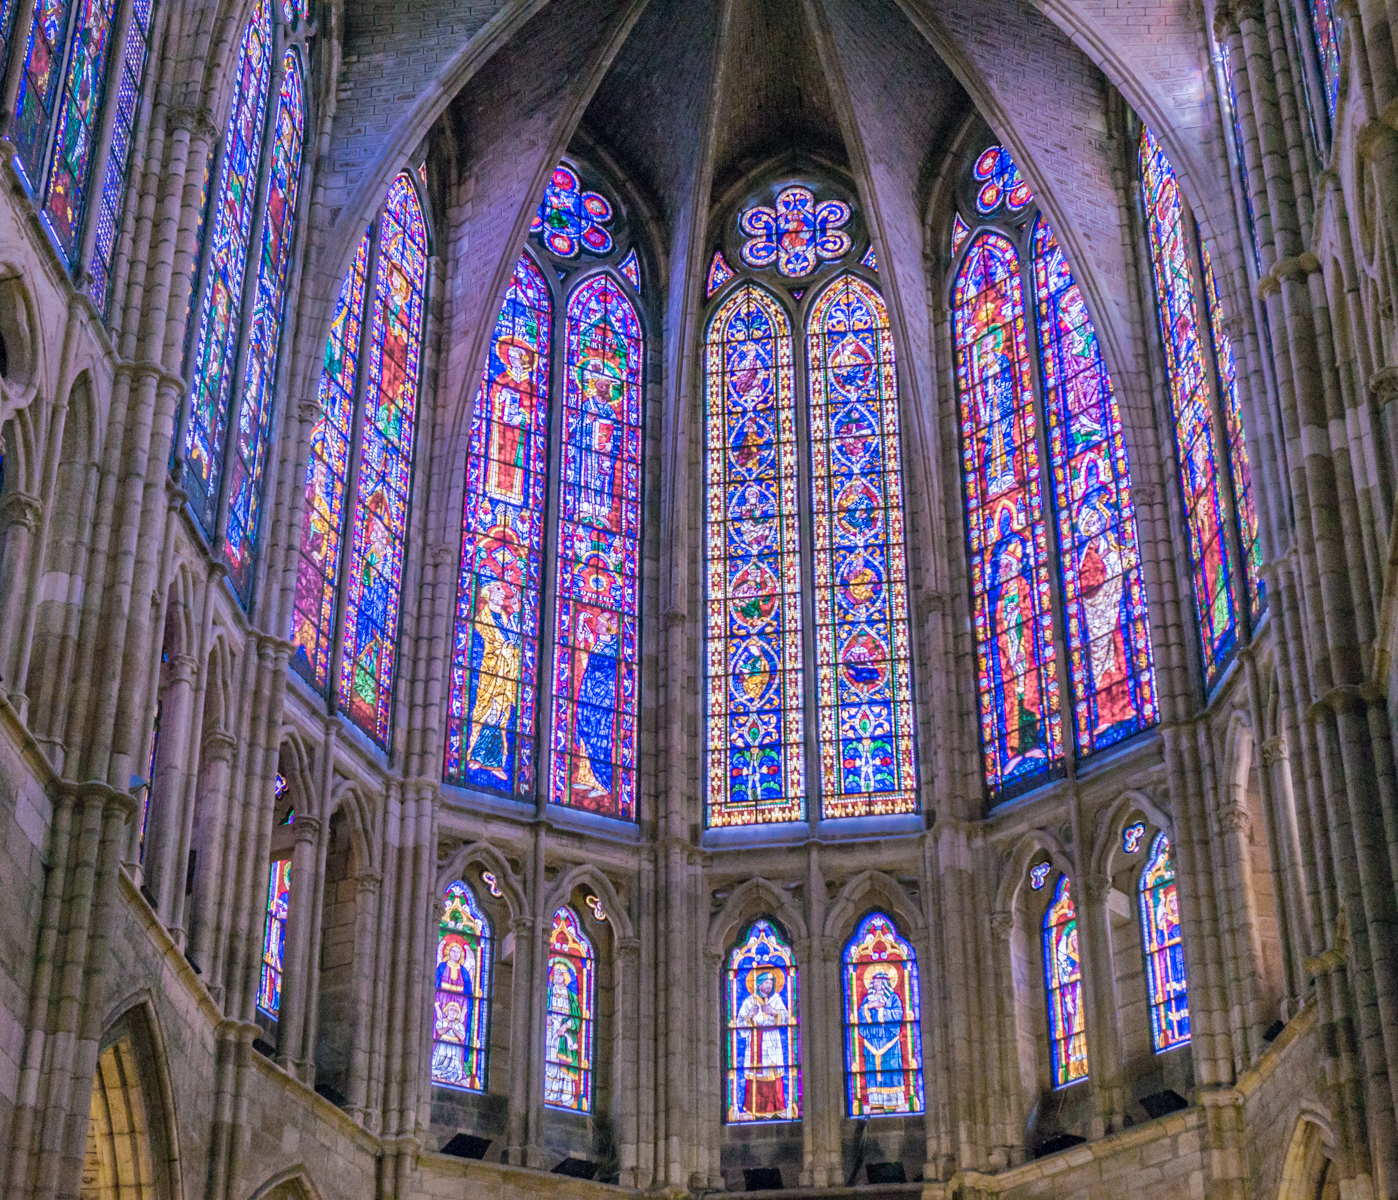 Stained glass windows above and surrounding the main altar of the Catedral de Santa Maria de Regla de Leon (Spain) | Photo by Mike Hudak